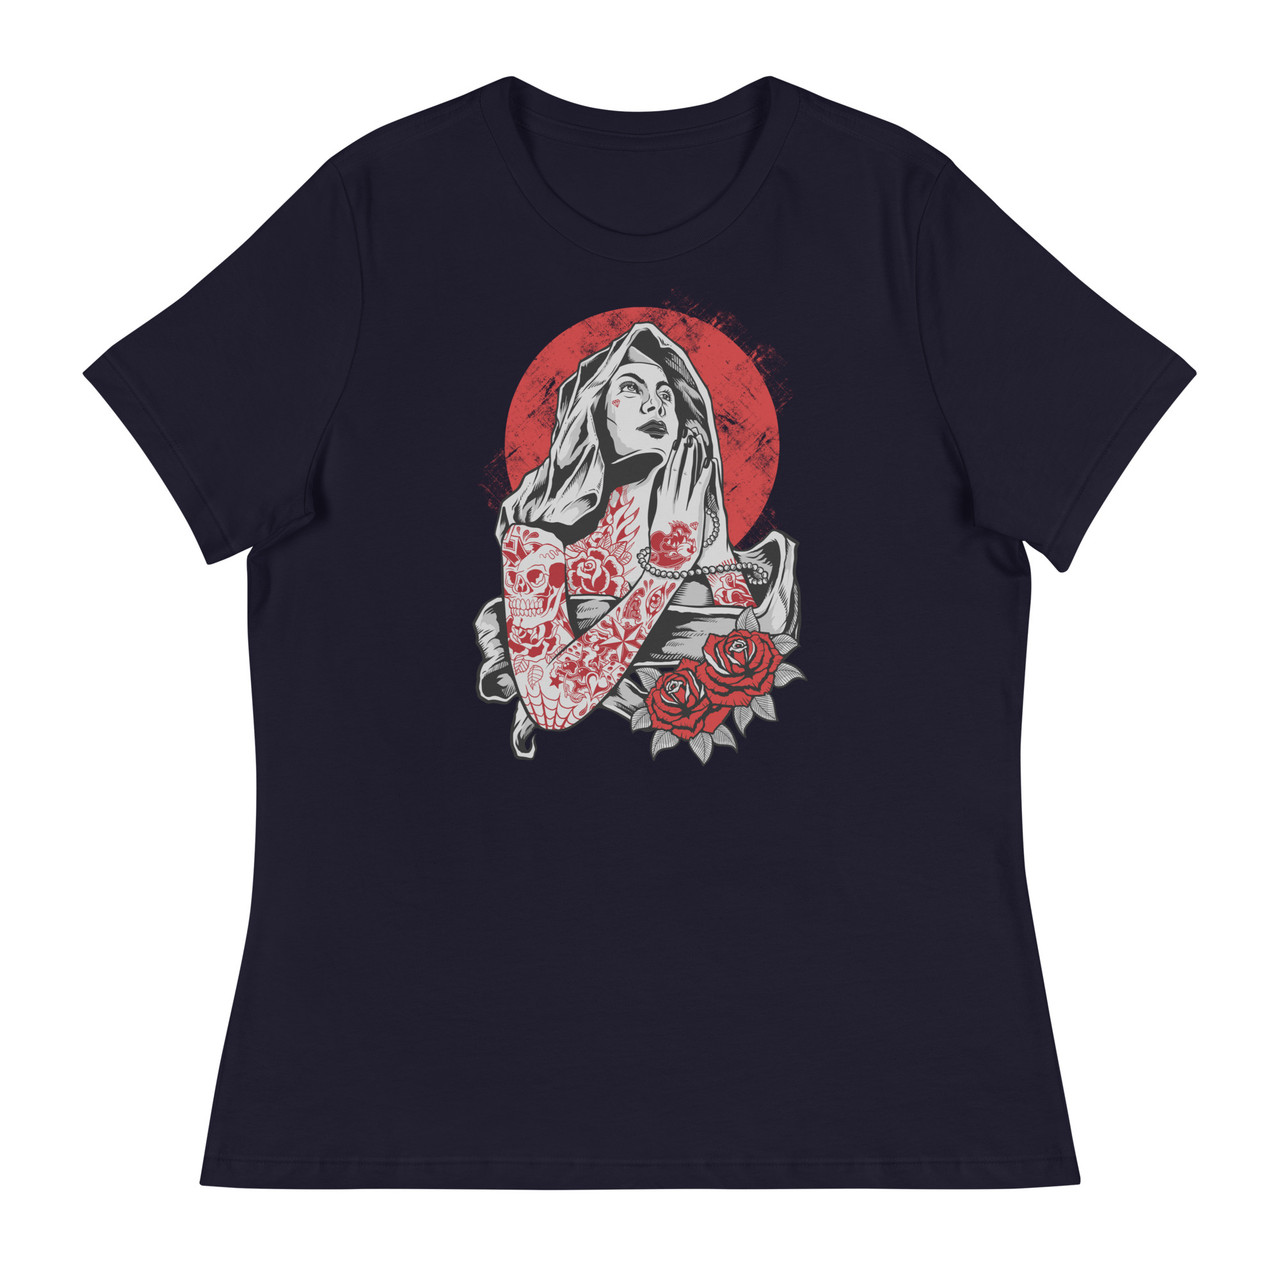 Virgin Mary Tattoo Women's Relaxed T-Shirt - Bella + Canvas 6400 